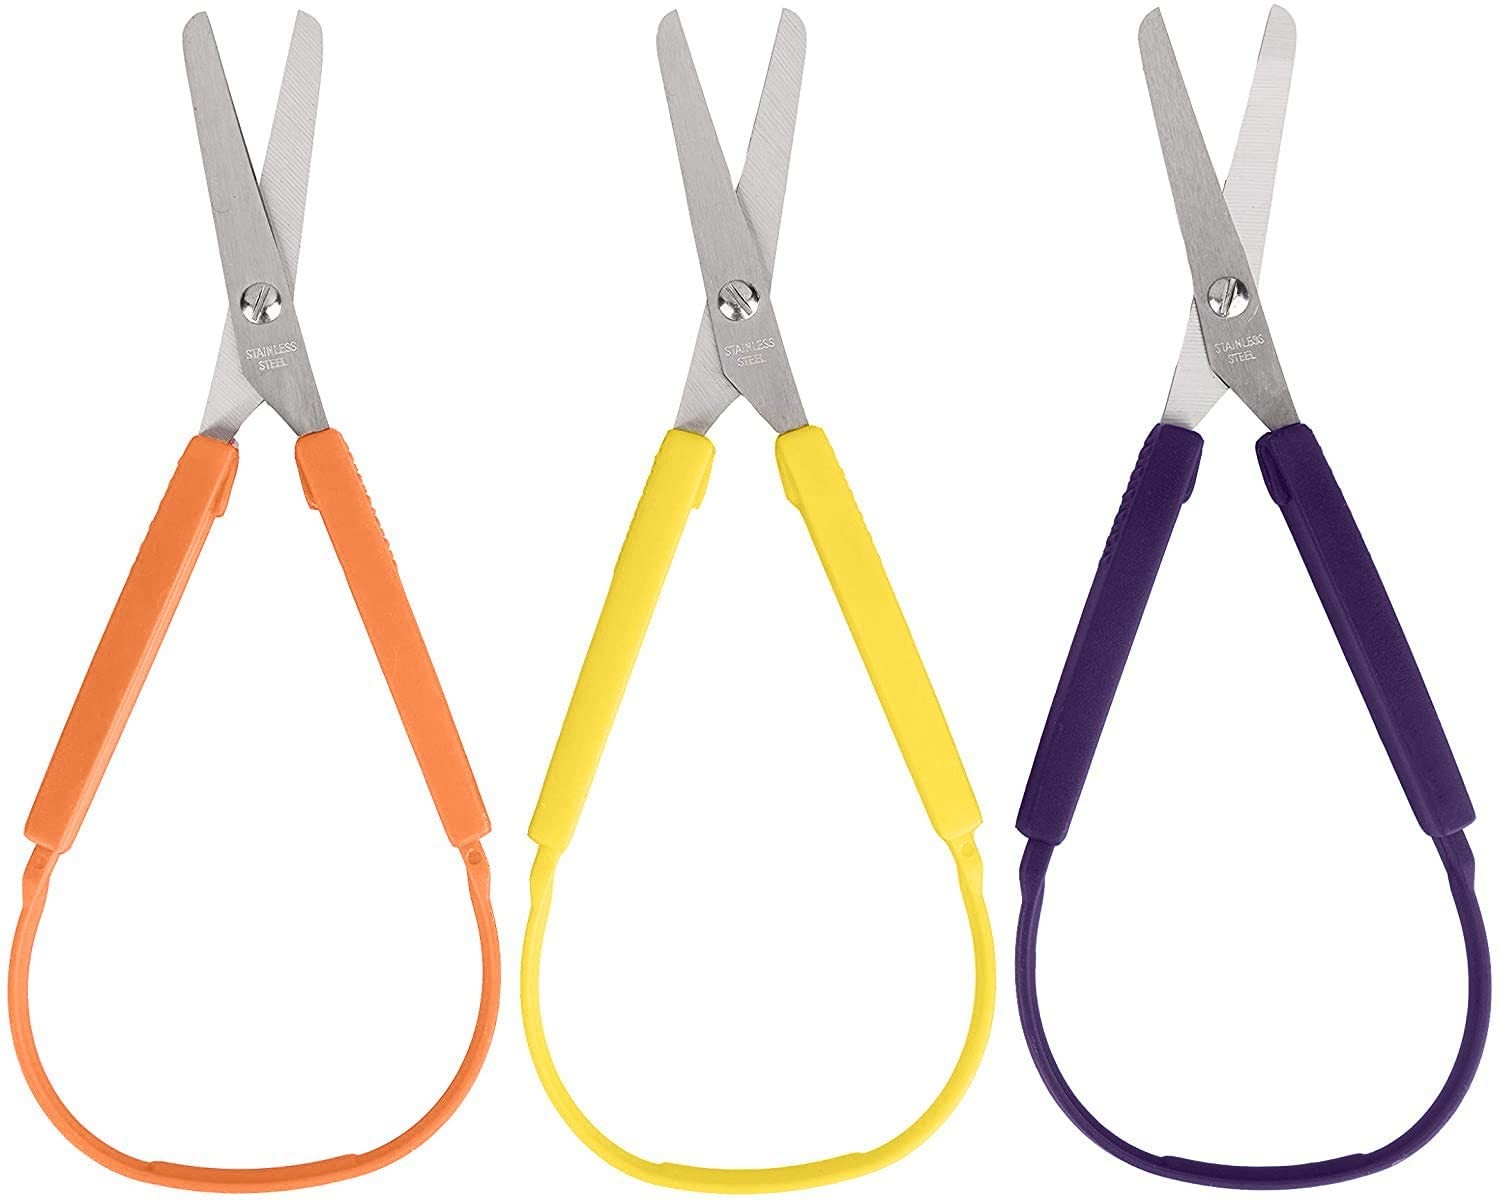 Loop Scissors for Kids (3-Pack) Colorful Looped, Adaptive Design